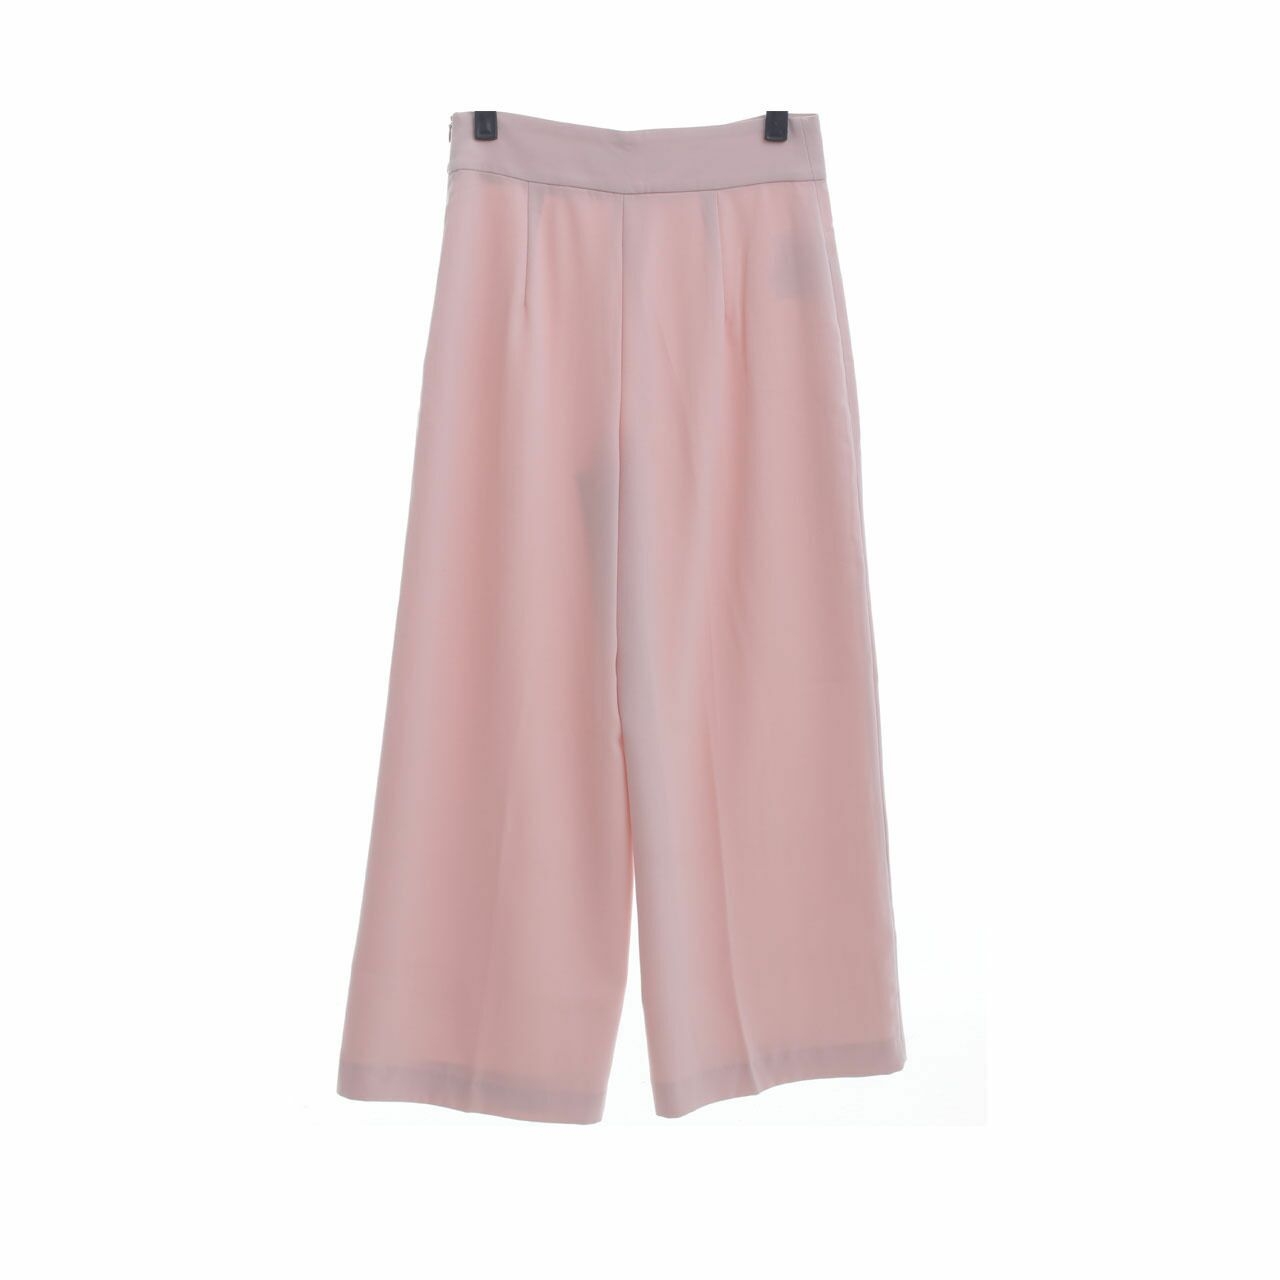 Zara Pink Culottes Long Pants